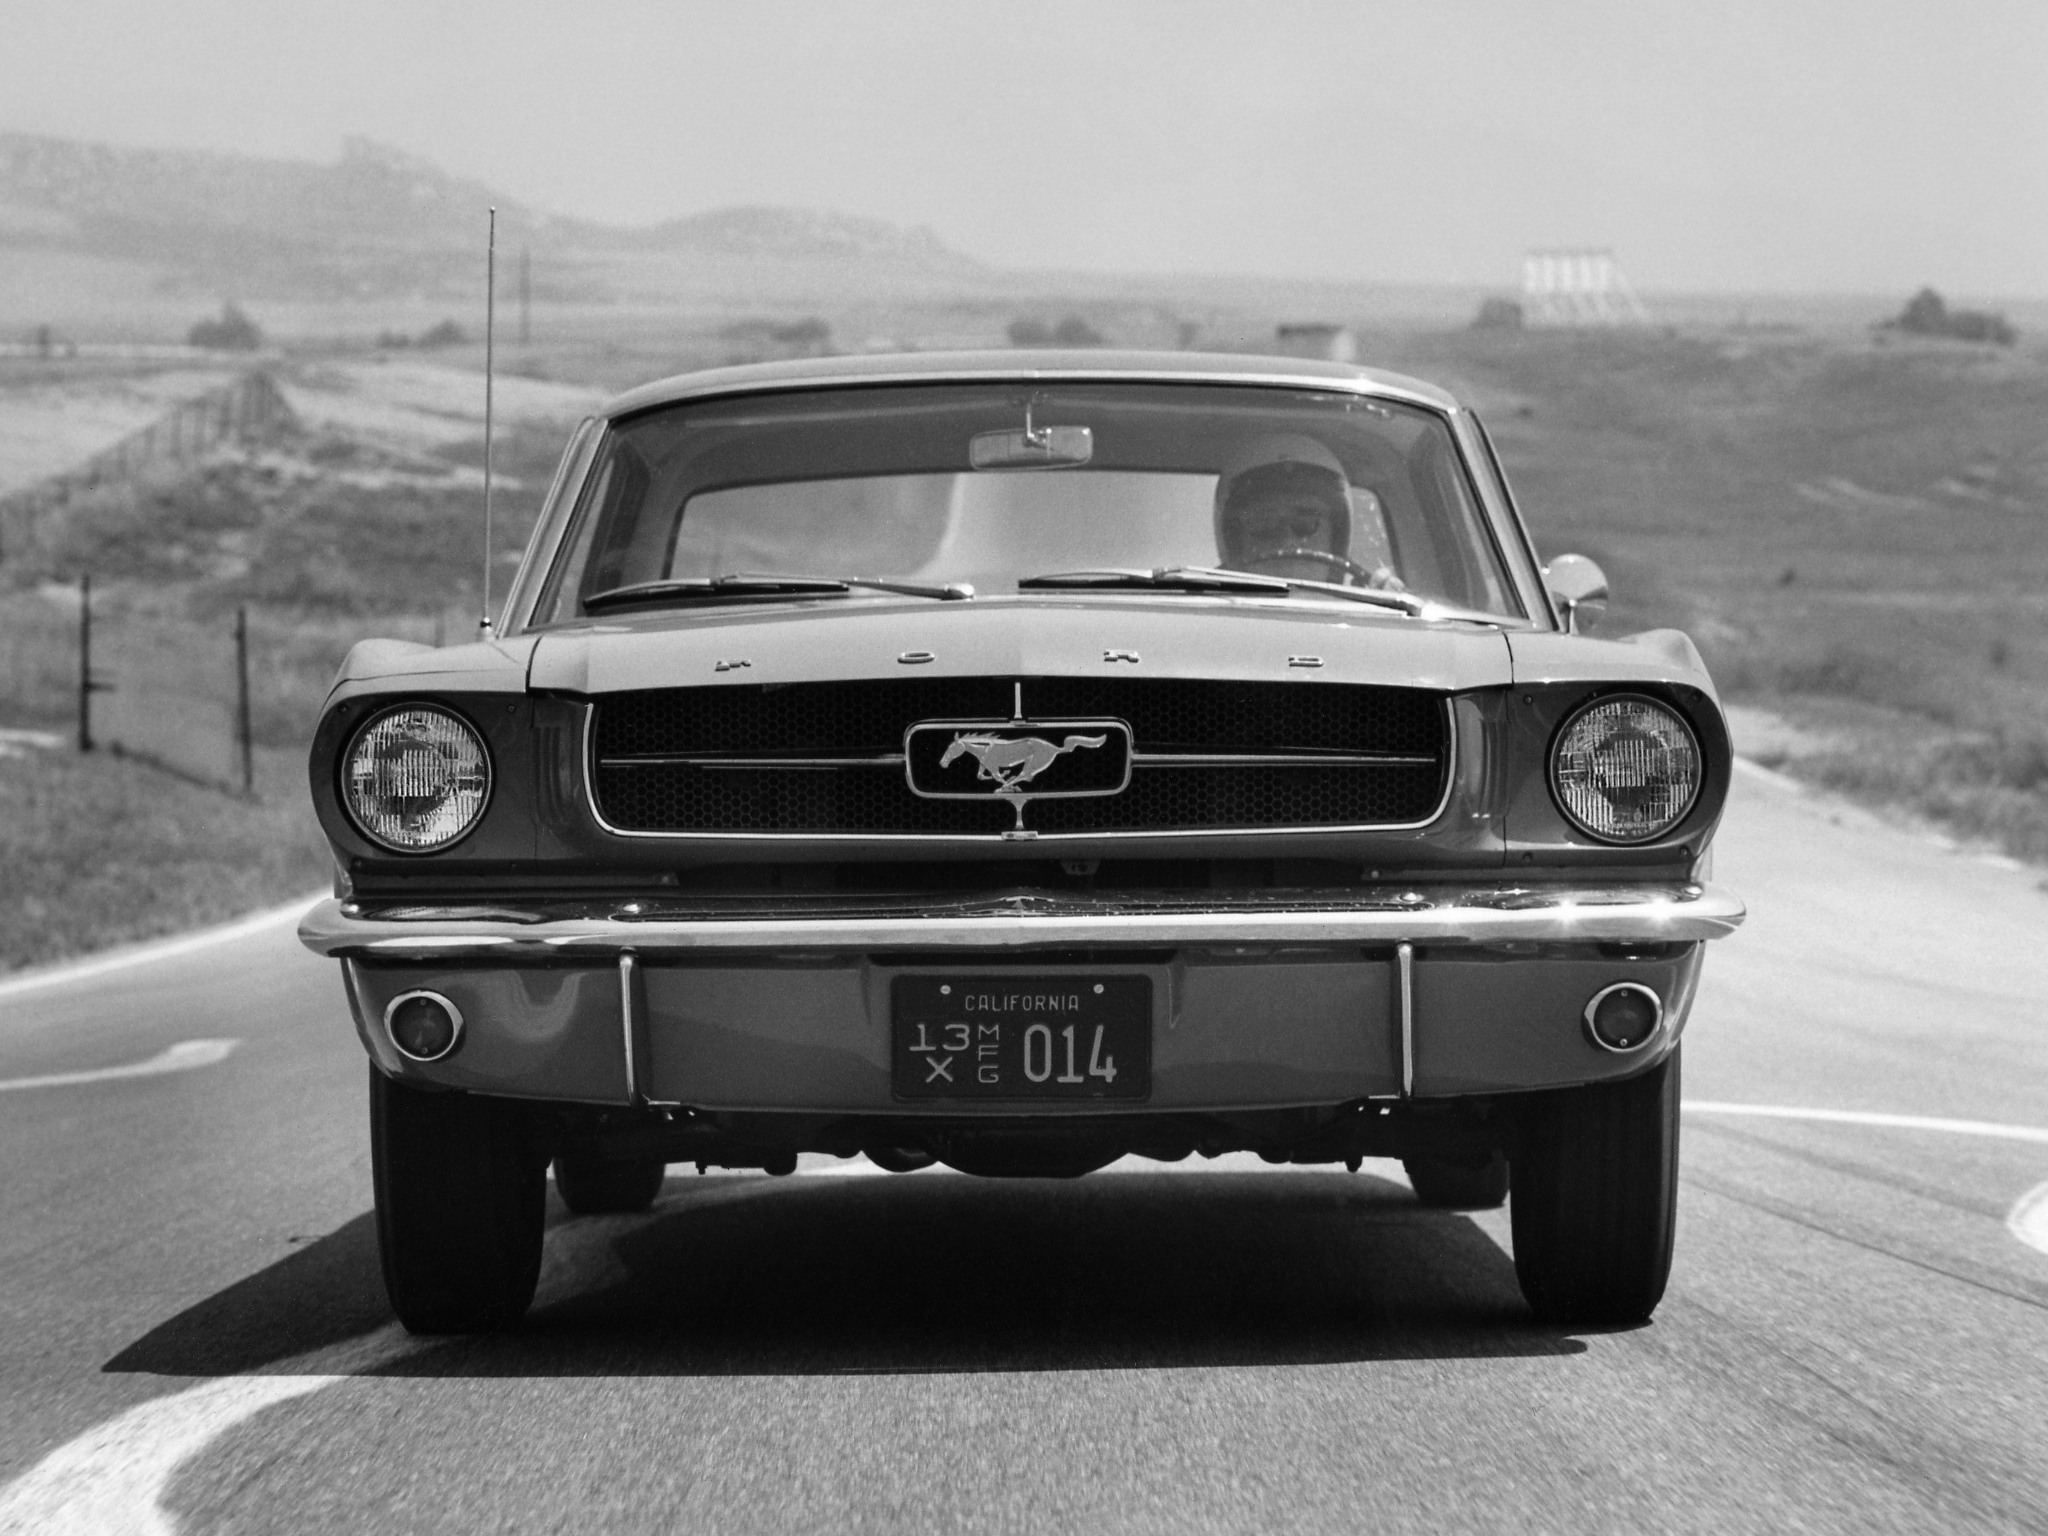 Classic Mustang Wallpaper High Quality #fmt • Otomotif at ngepLuk.com